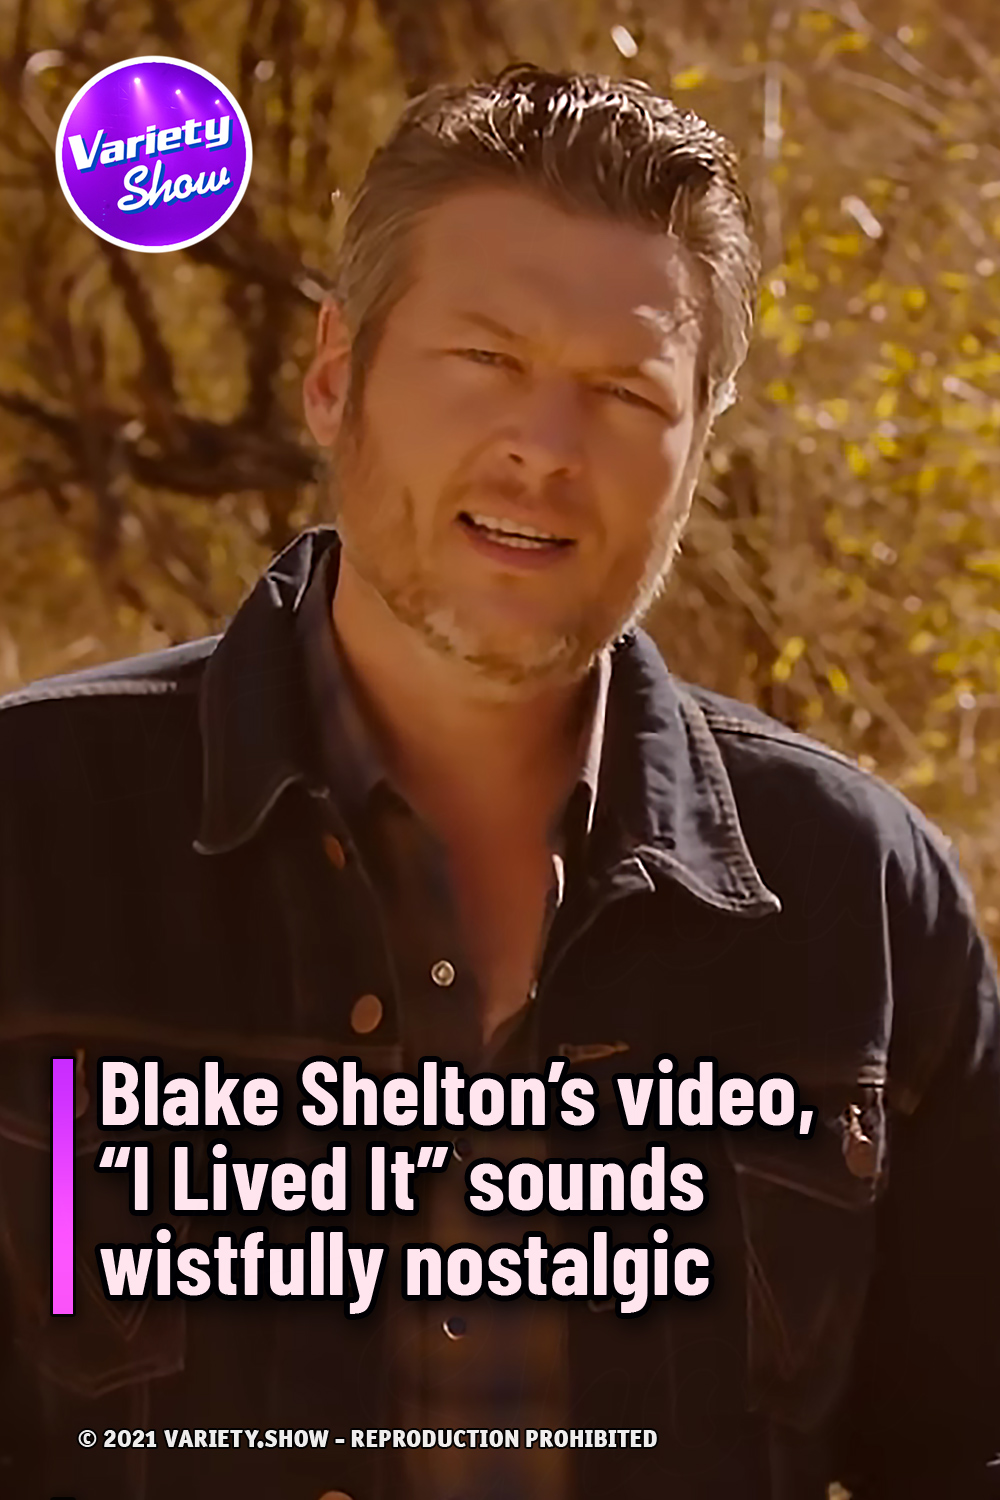 Blake Shelton’s video, “I Lived It” sounds wistfully nostalgic